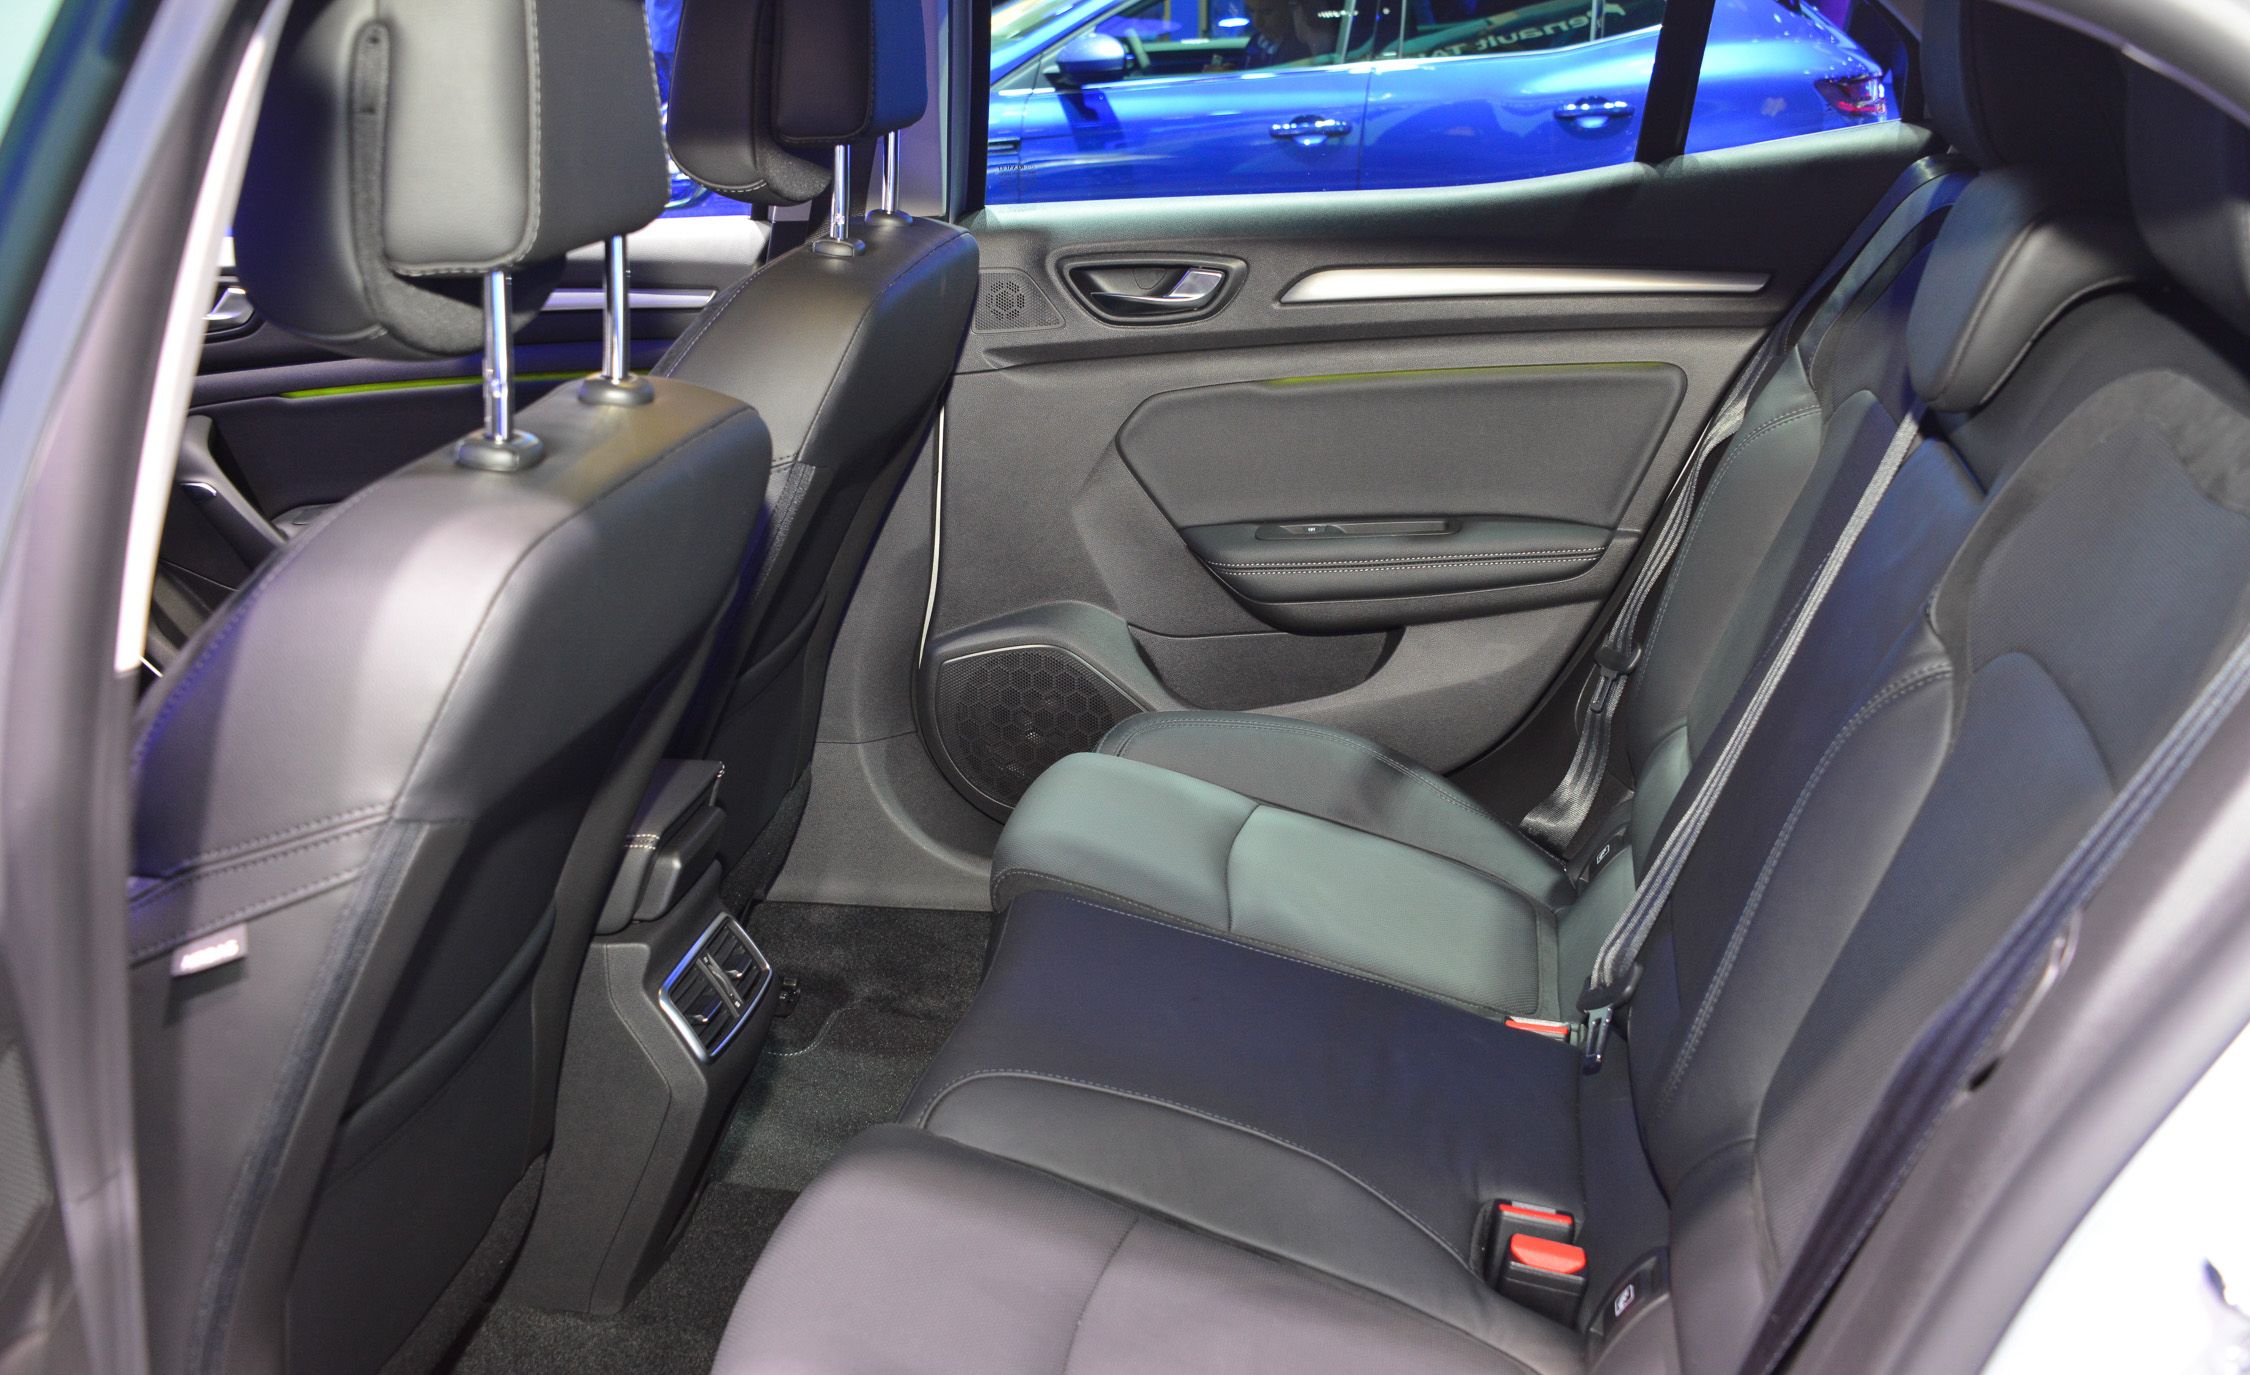 2016 Renault Megane Rear Seats Interior (View 7 of 27)